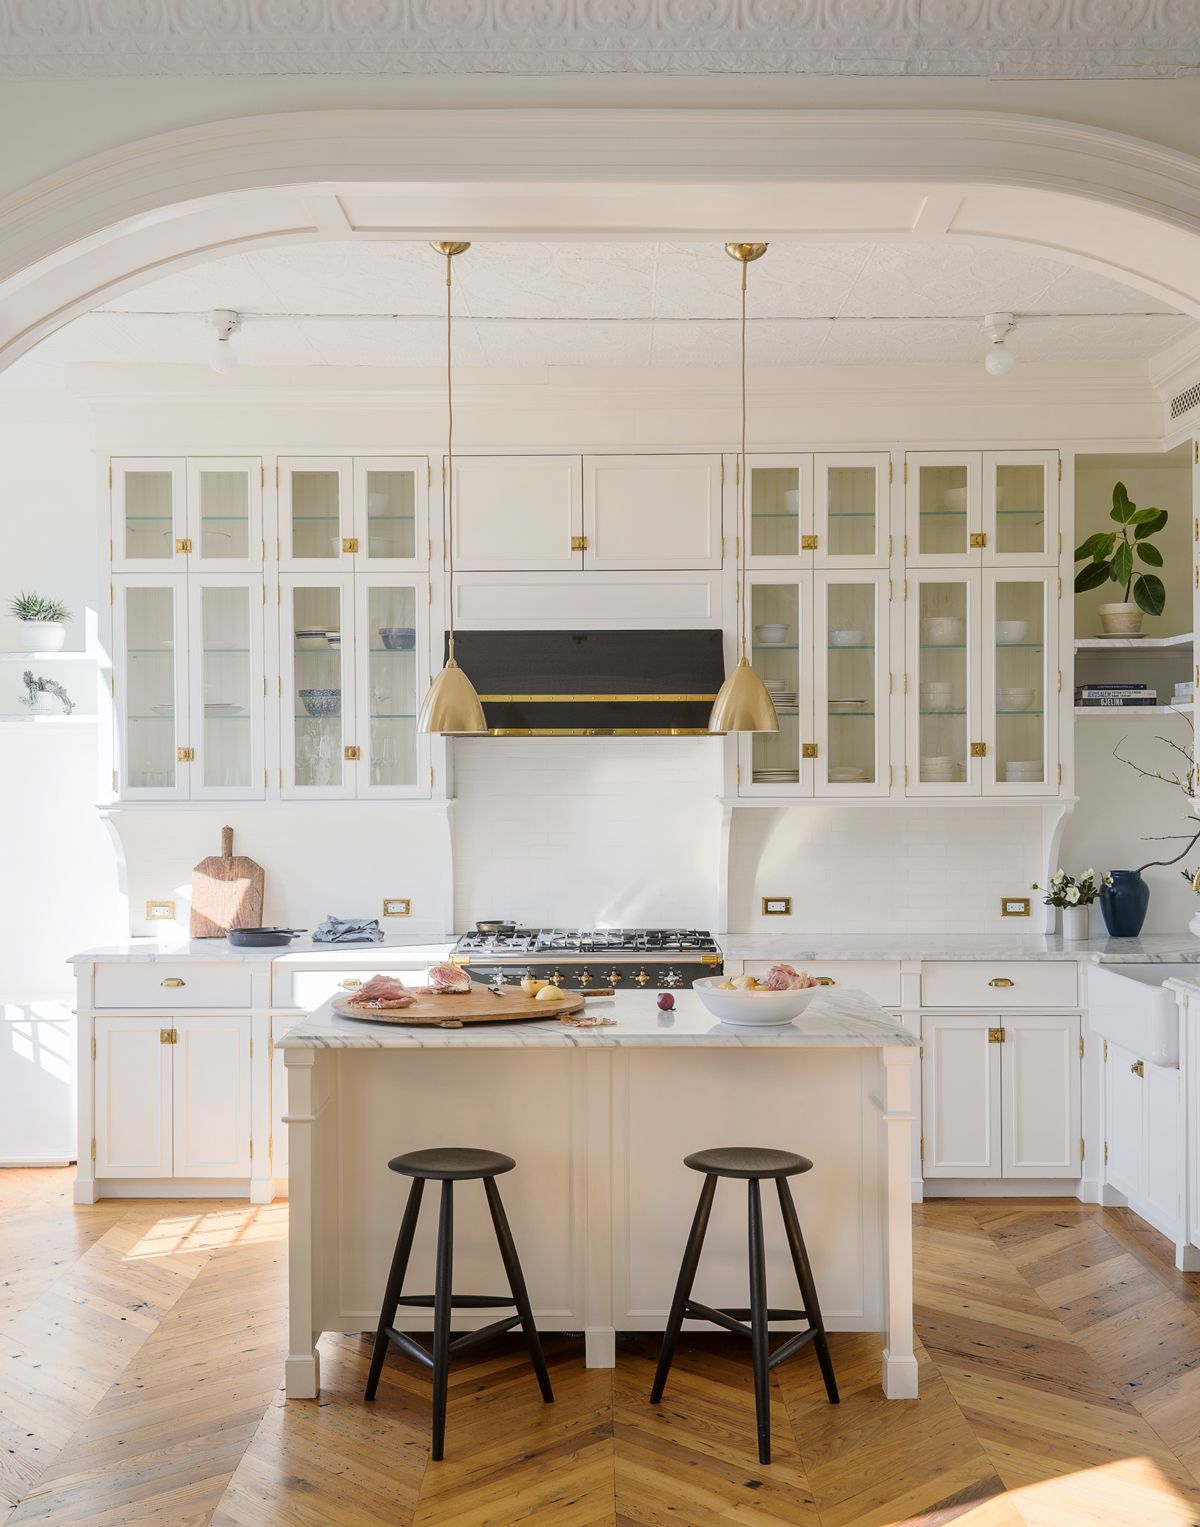 10 kitchen island lighting ideas to illuminate the focal point of your ...